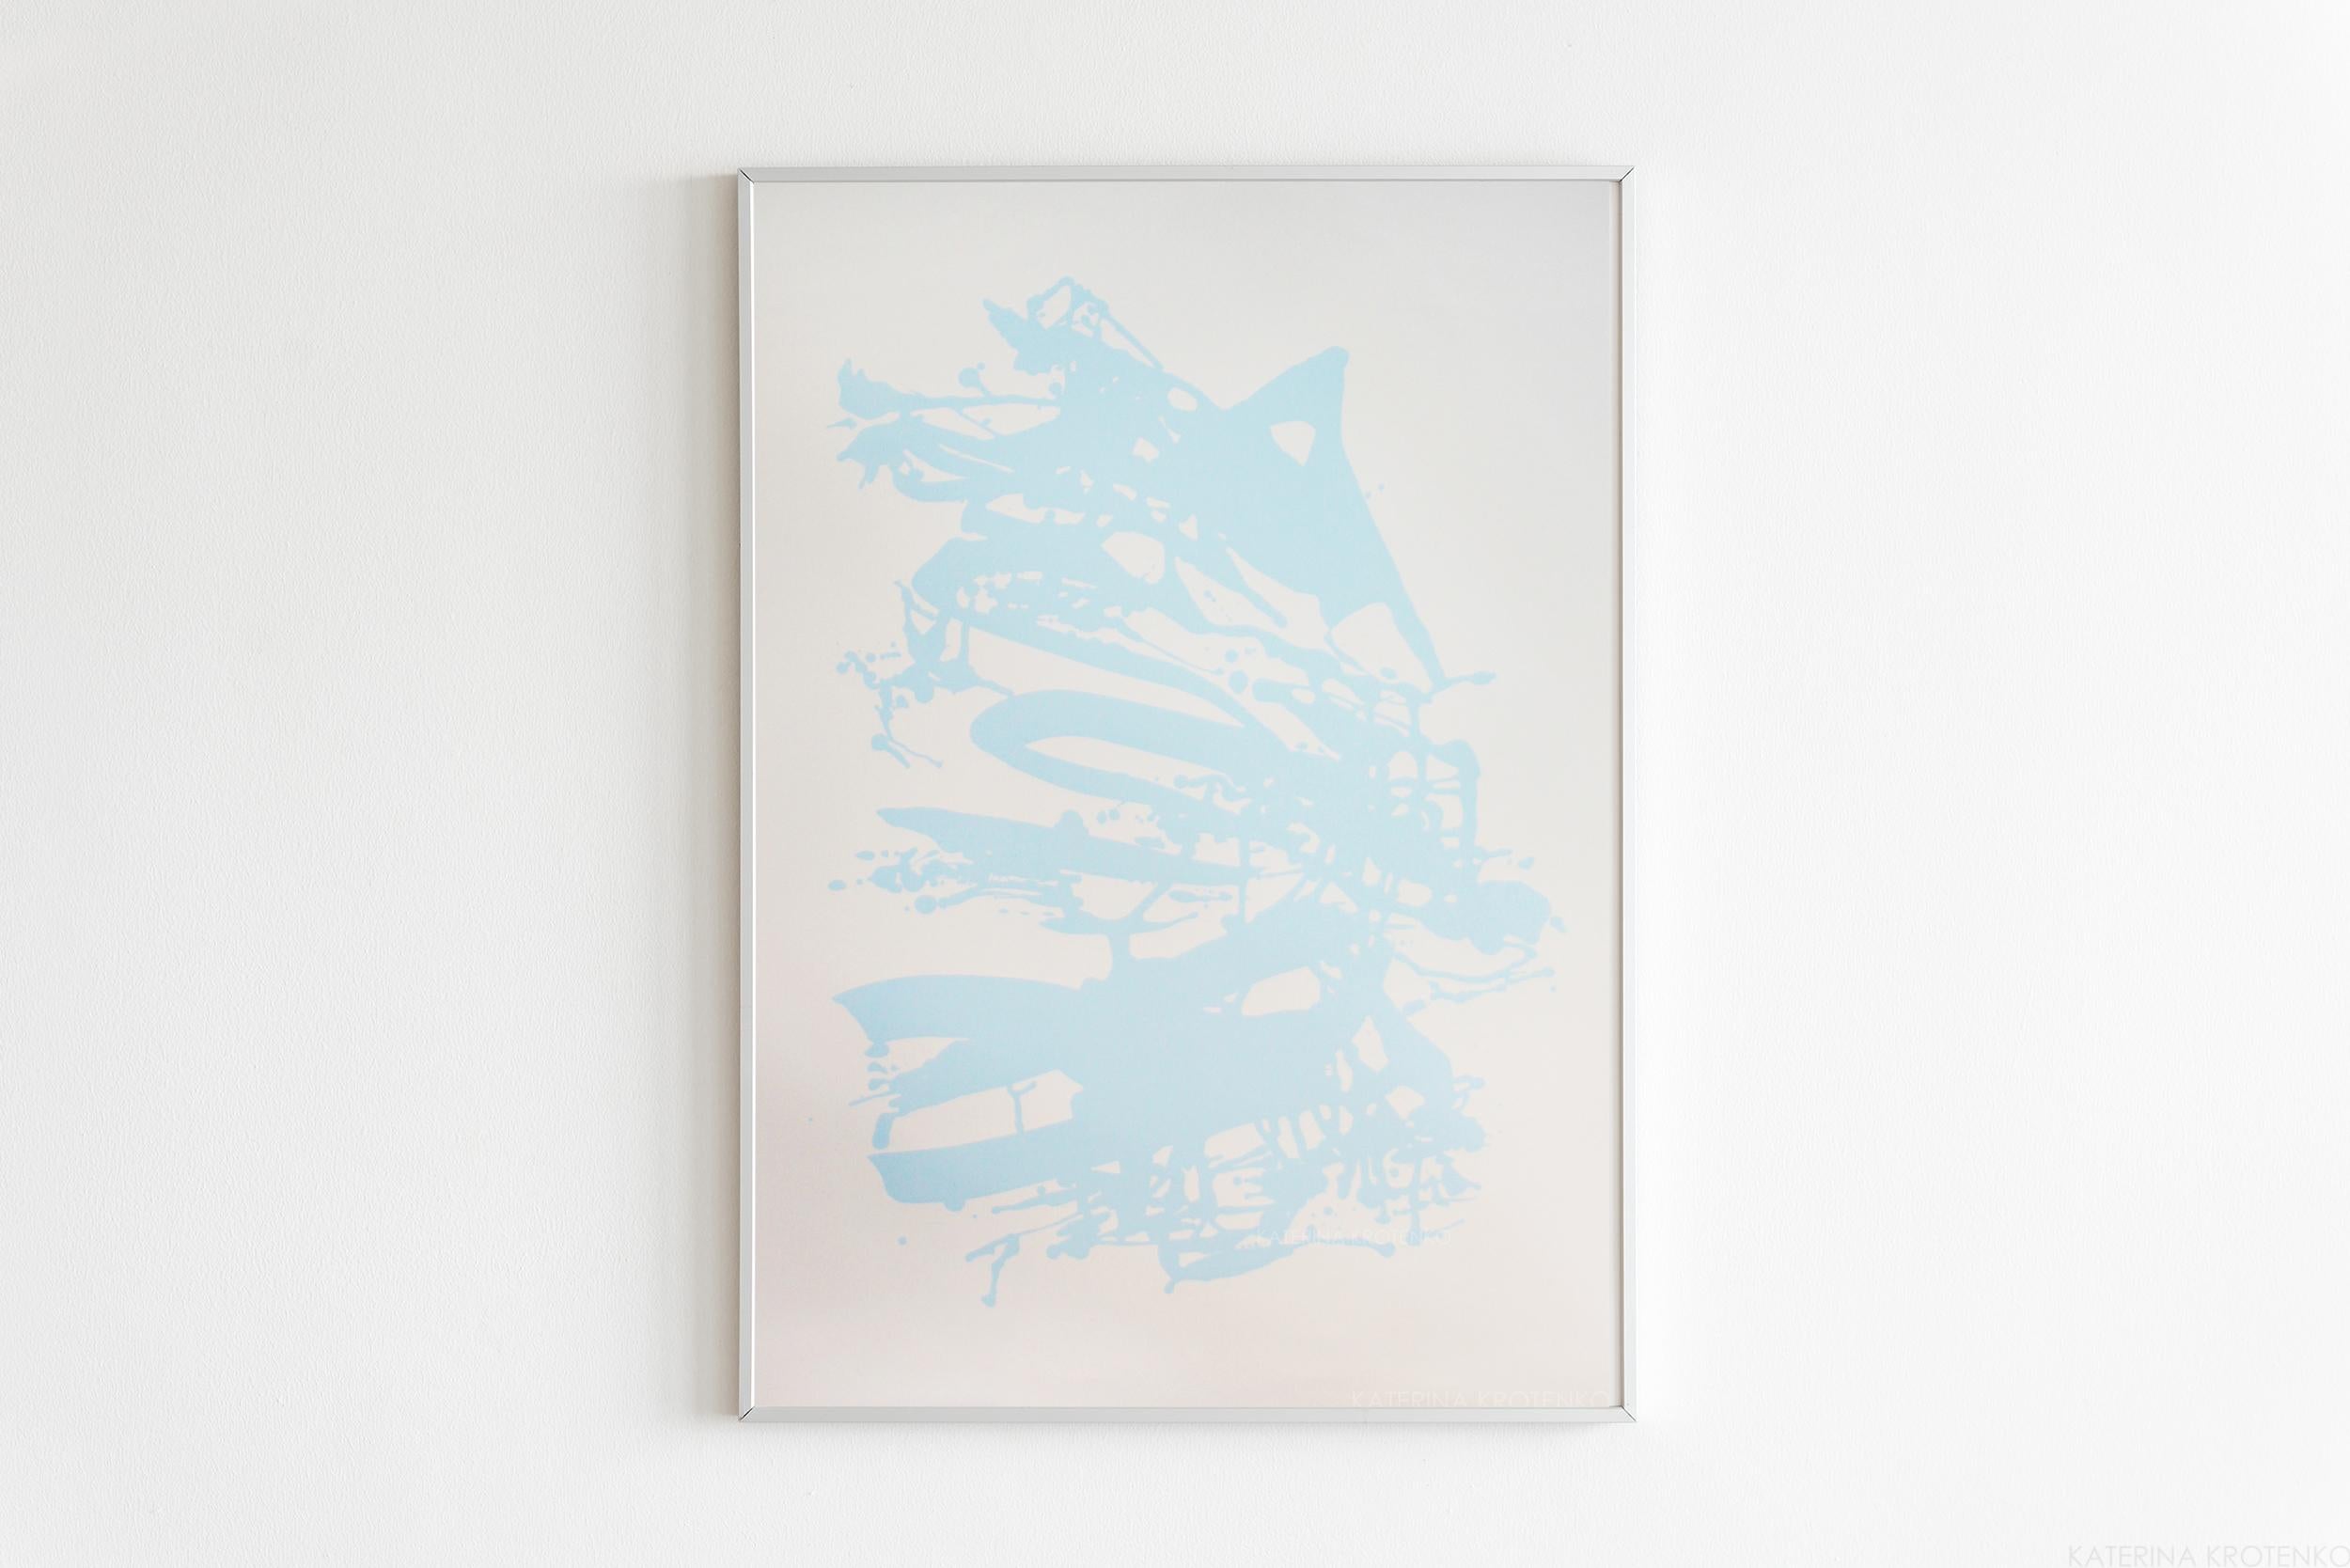 Katerina Krotenko Abstract Print - Invisible treasures # 6 serigraphy